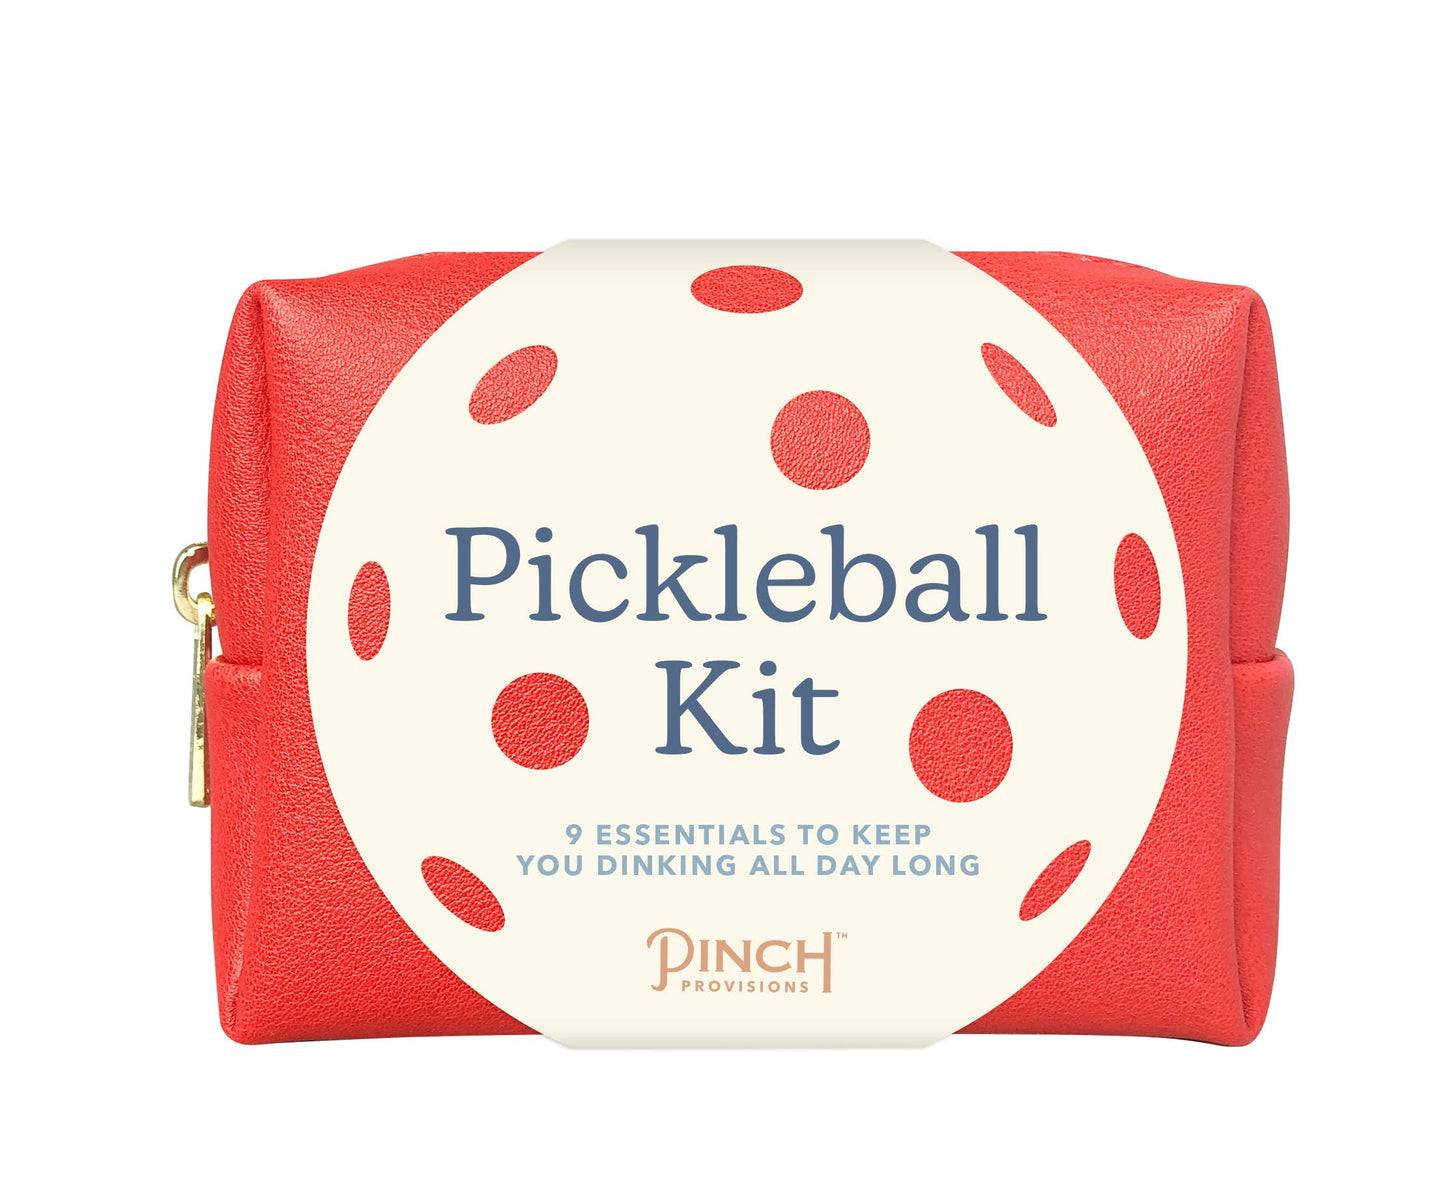 New Colors! Pickleball Kit: Blush